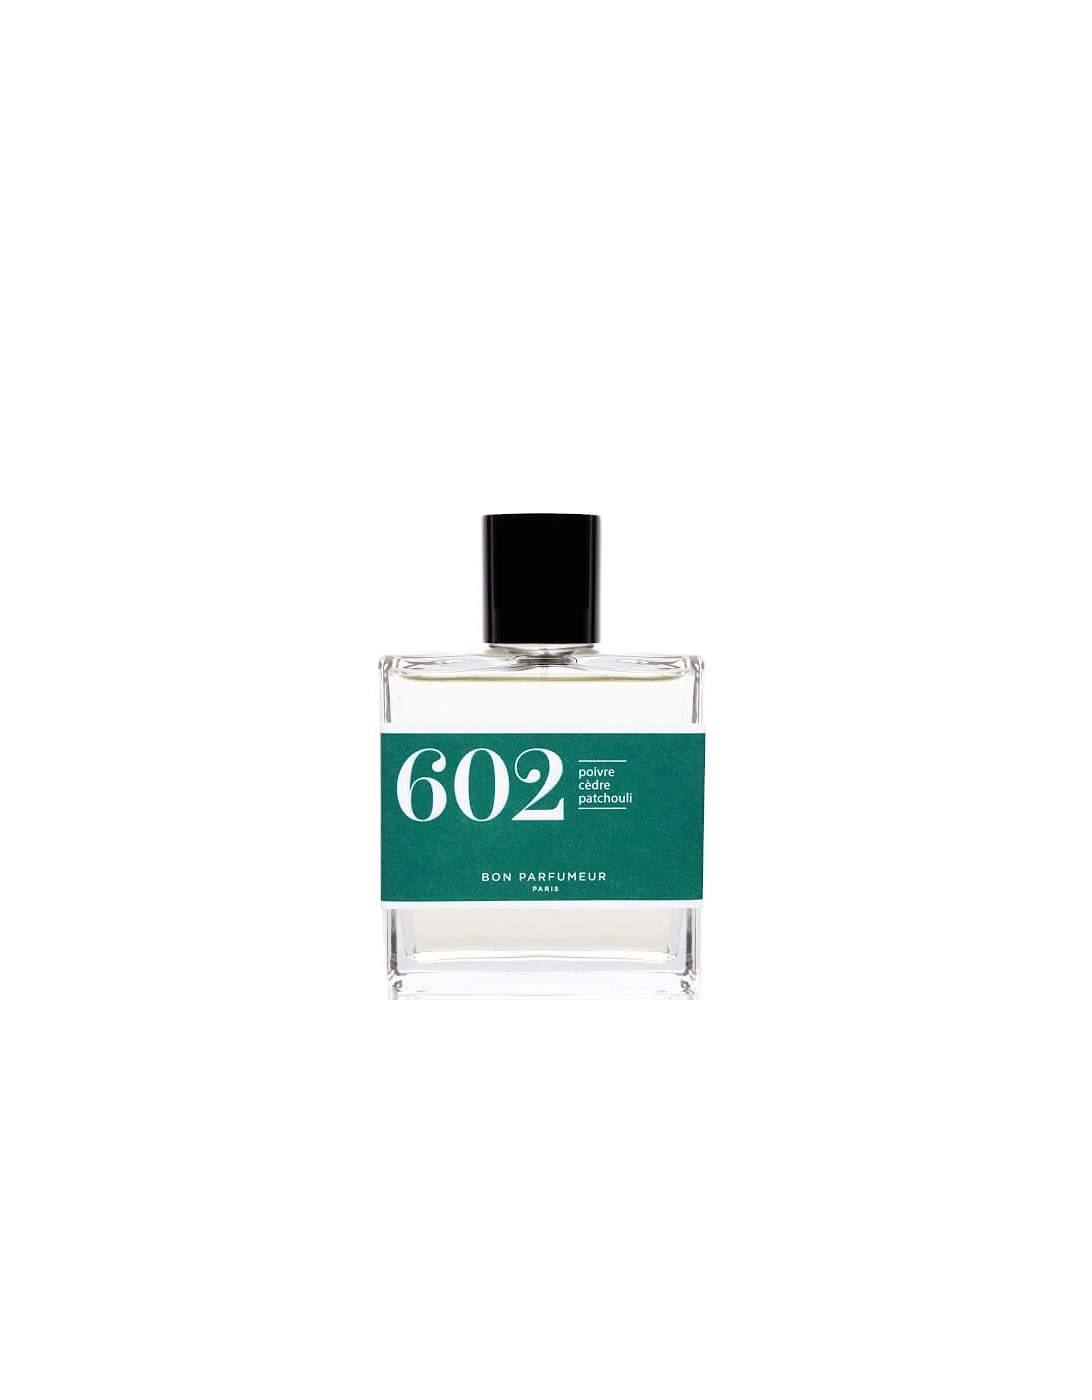 602 Pepper Cedar Patchouli Eau de Parfum - 100ml, 2 of 1